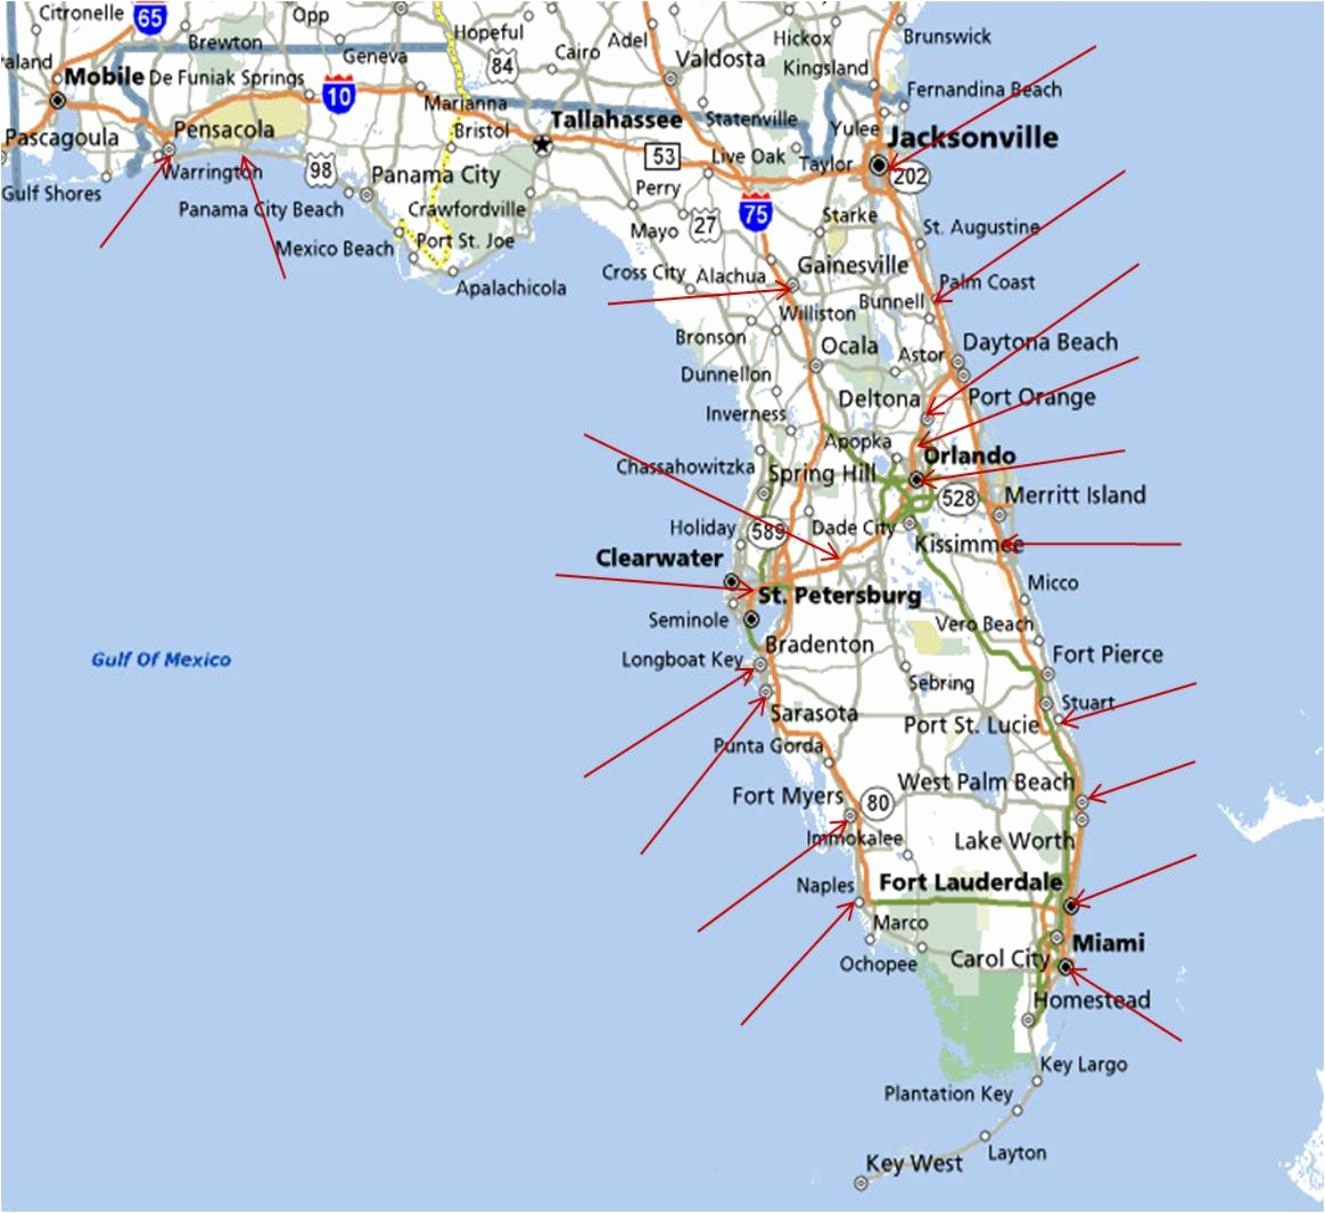 Best East Coast Florida Beaches New Map Florida West Coast Florida Gulf Coast Cities In Florida Map 